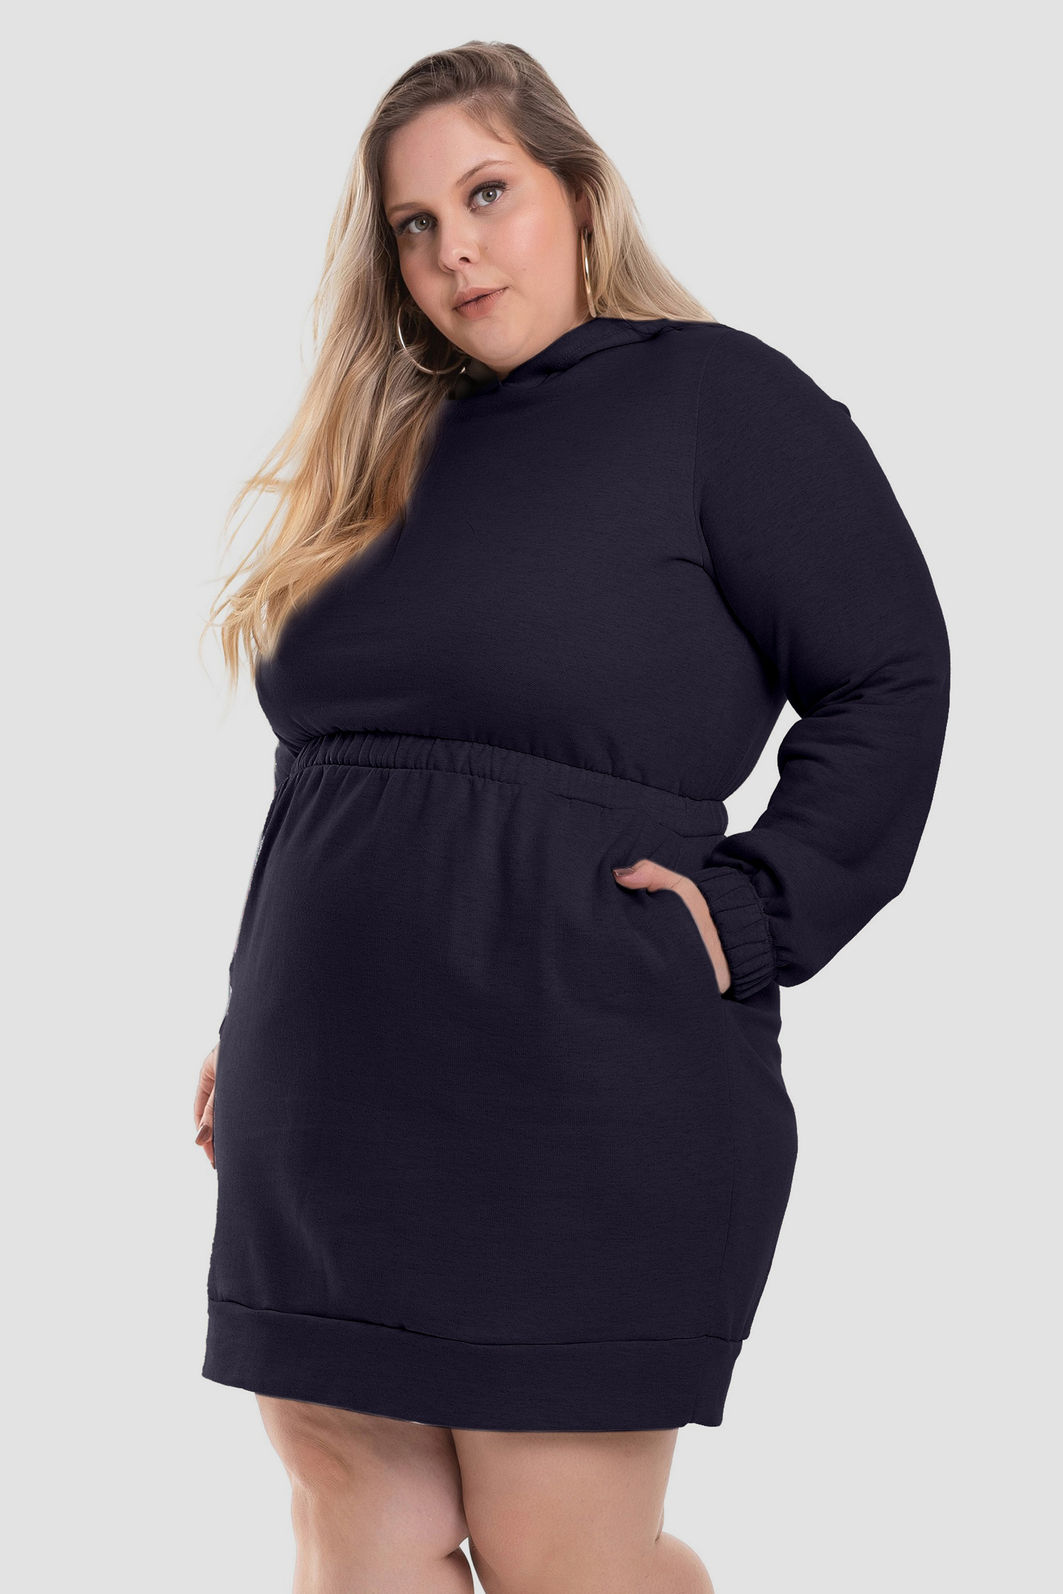 Vestido Feminino Plus Size Liso em Moletom BGO Company - Loja Virtual